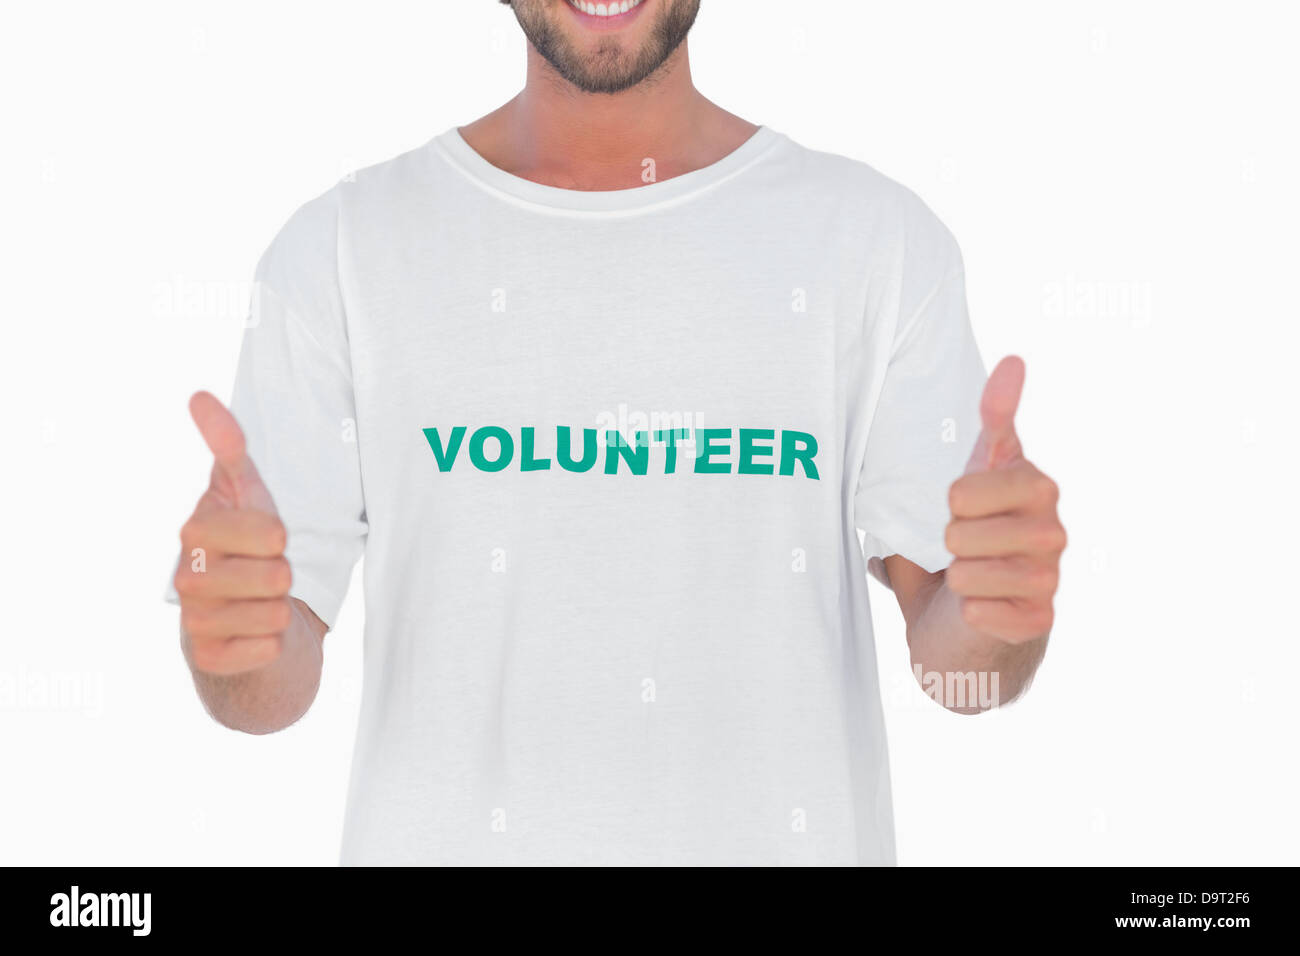 Man wearing volunteer tshirt giving thumbs up Stock Photo